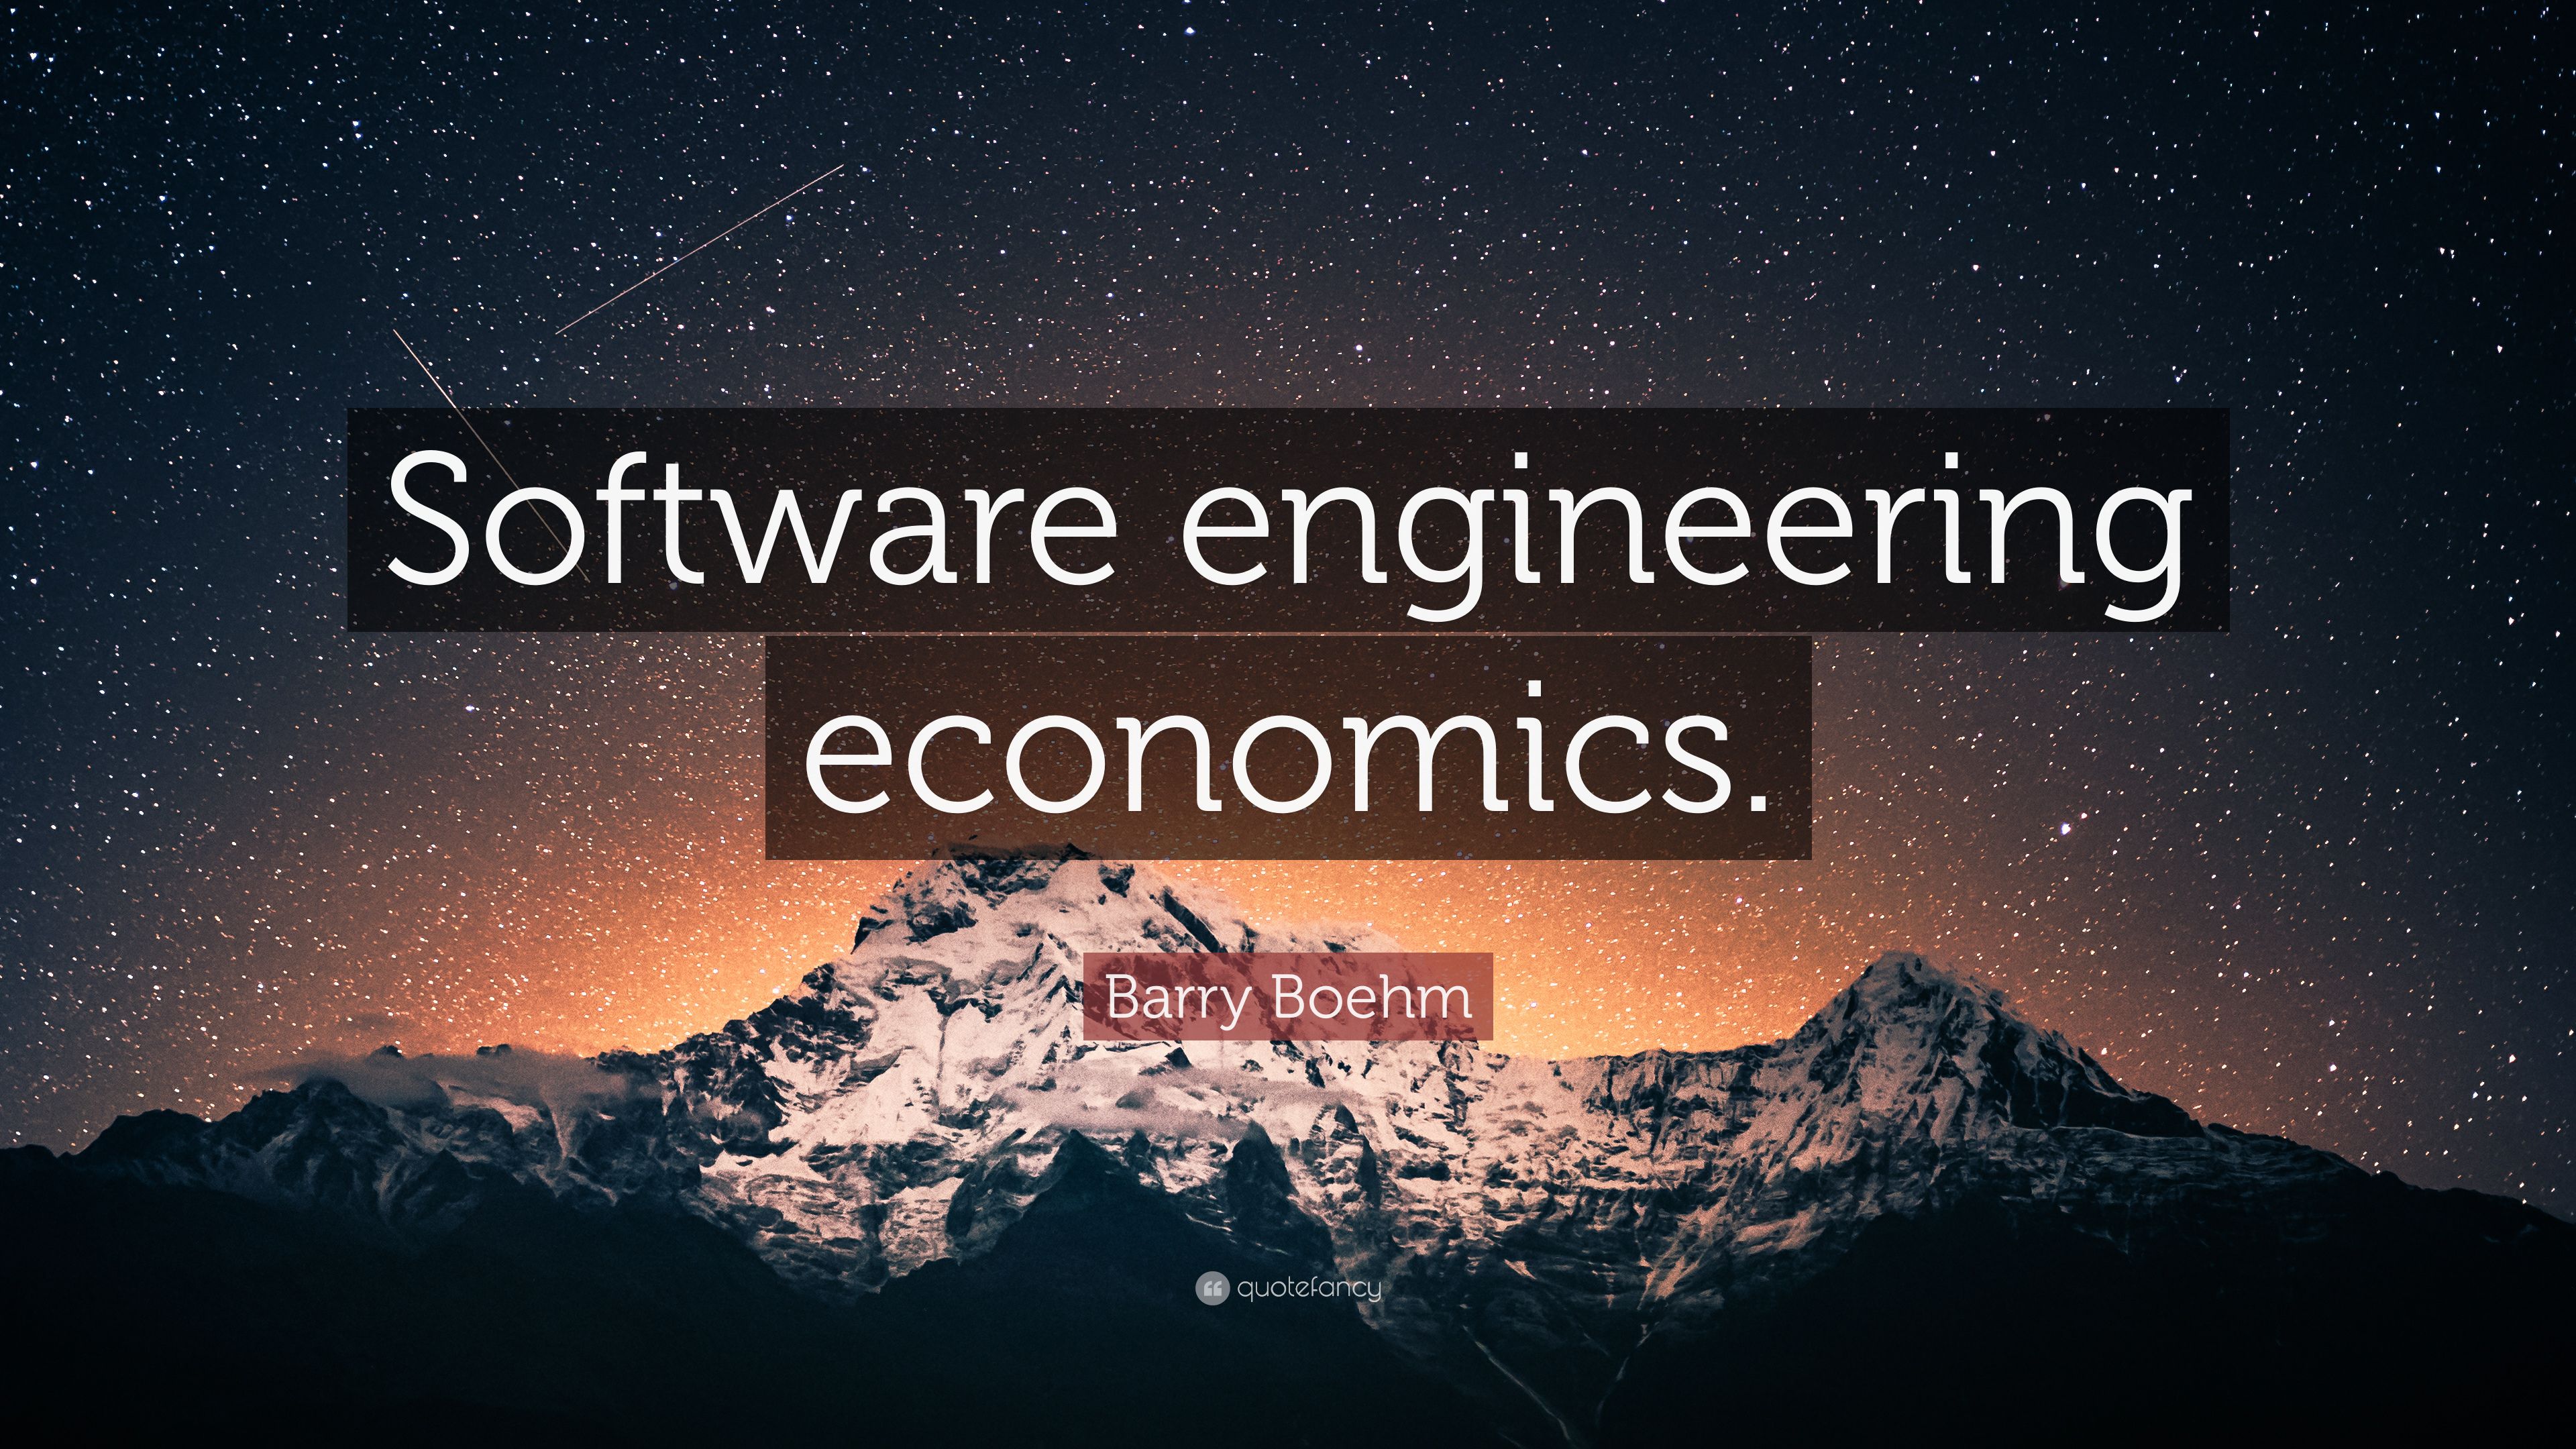 3840x2160 Barry Boehm Quote: "Software engineering economics." 